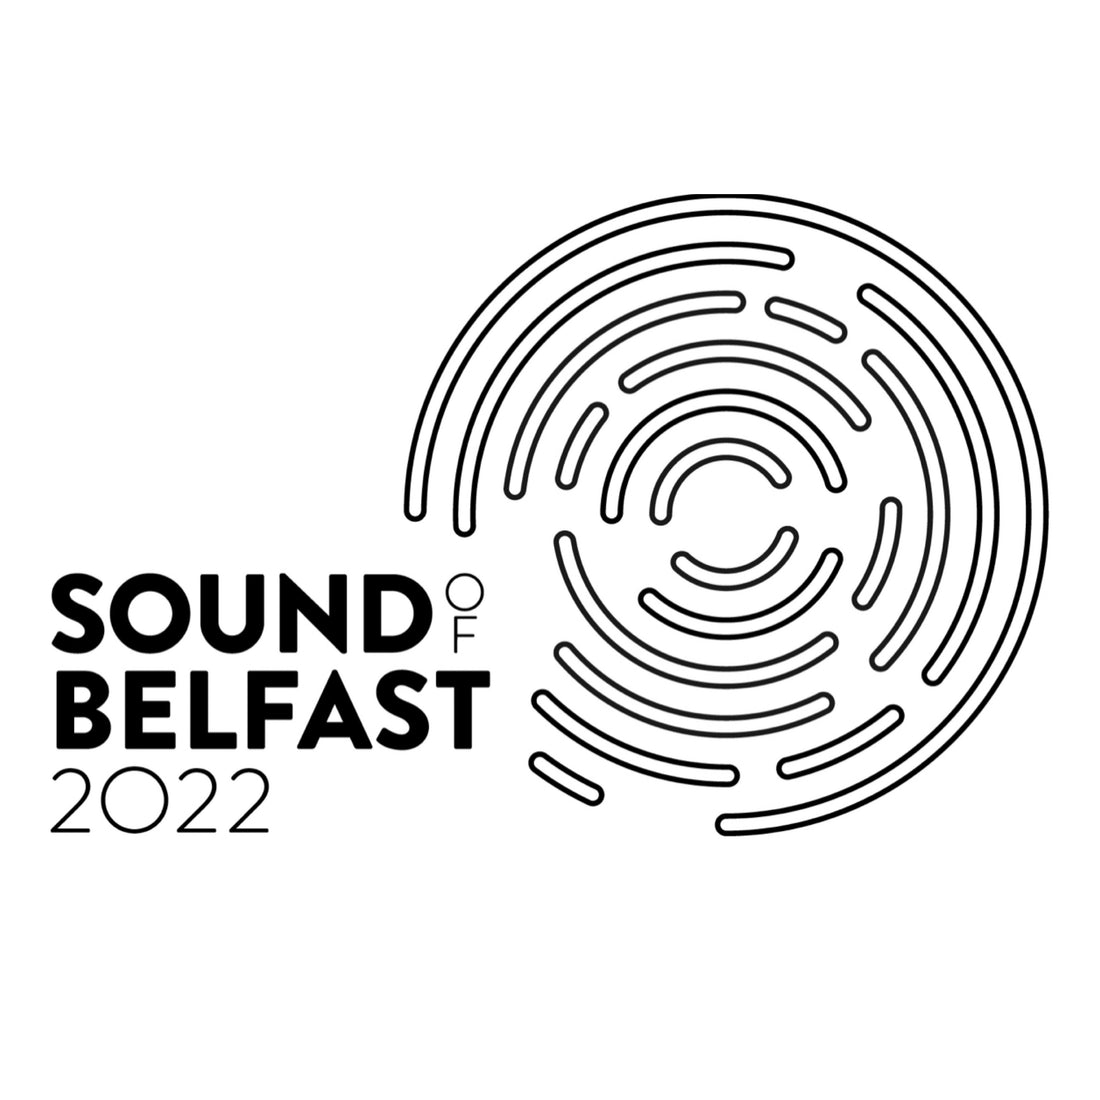 Sound of Belfast returns this November